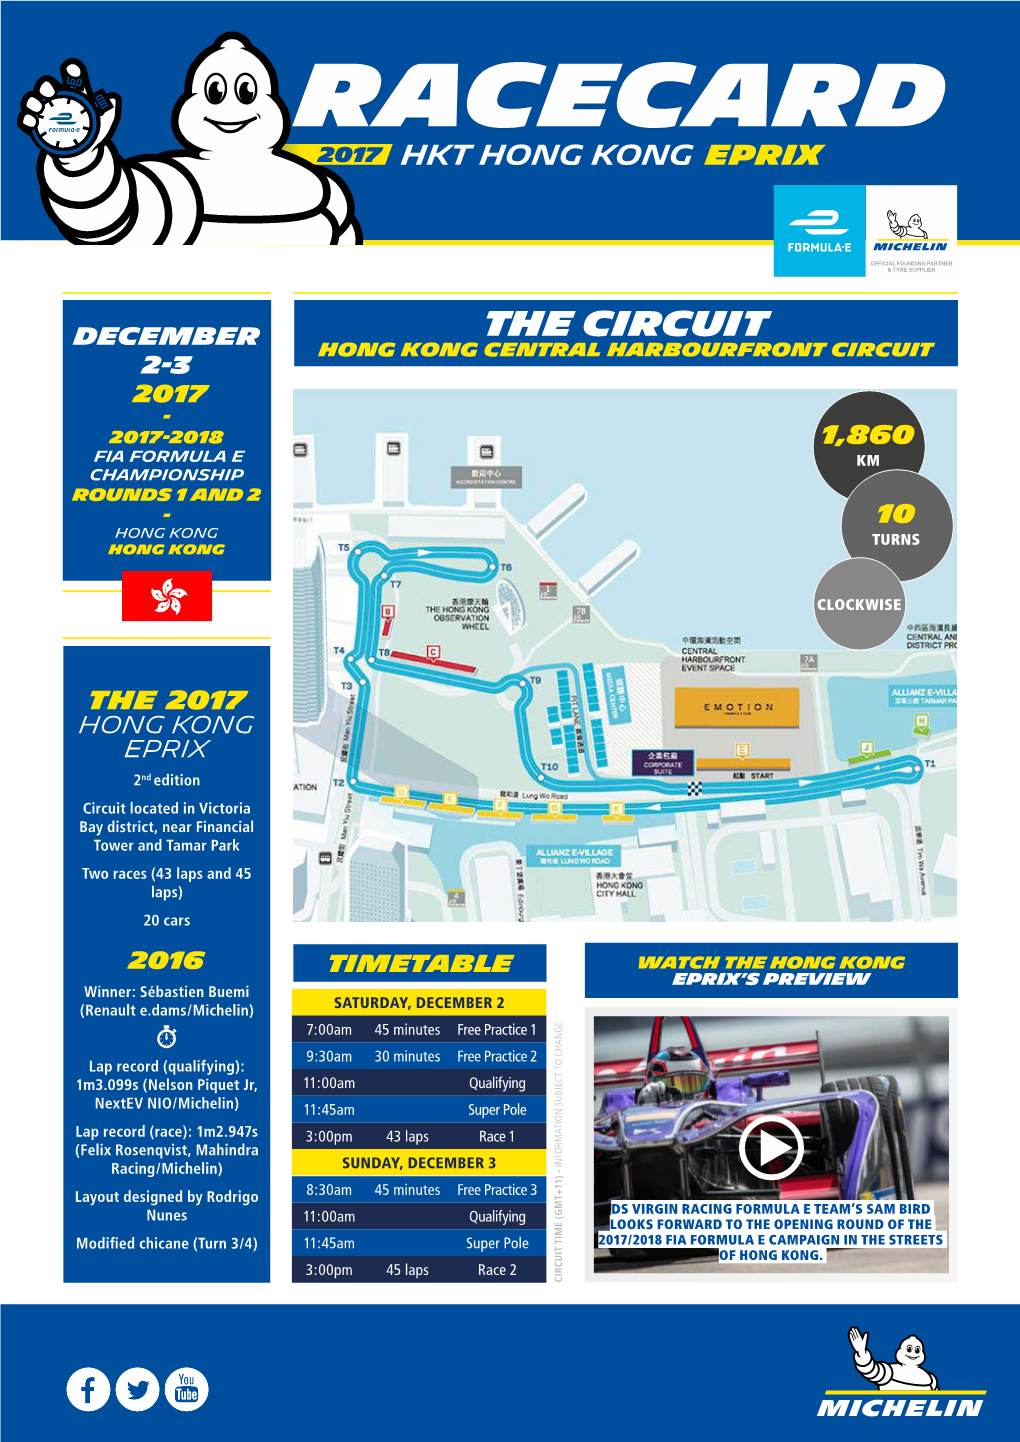 Fia Formula E Km Championship Rounds 1 and 2 - 10 Hong Kong Turns Hong Kong